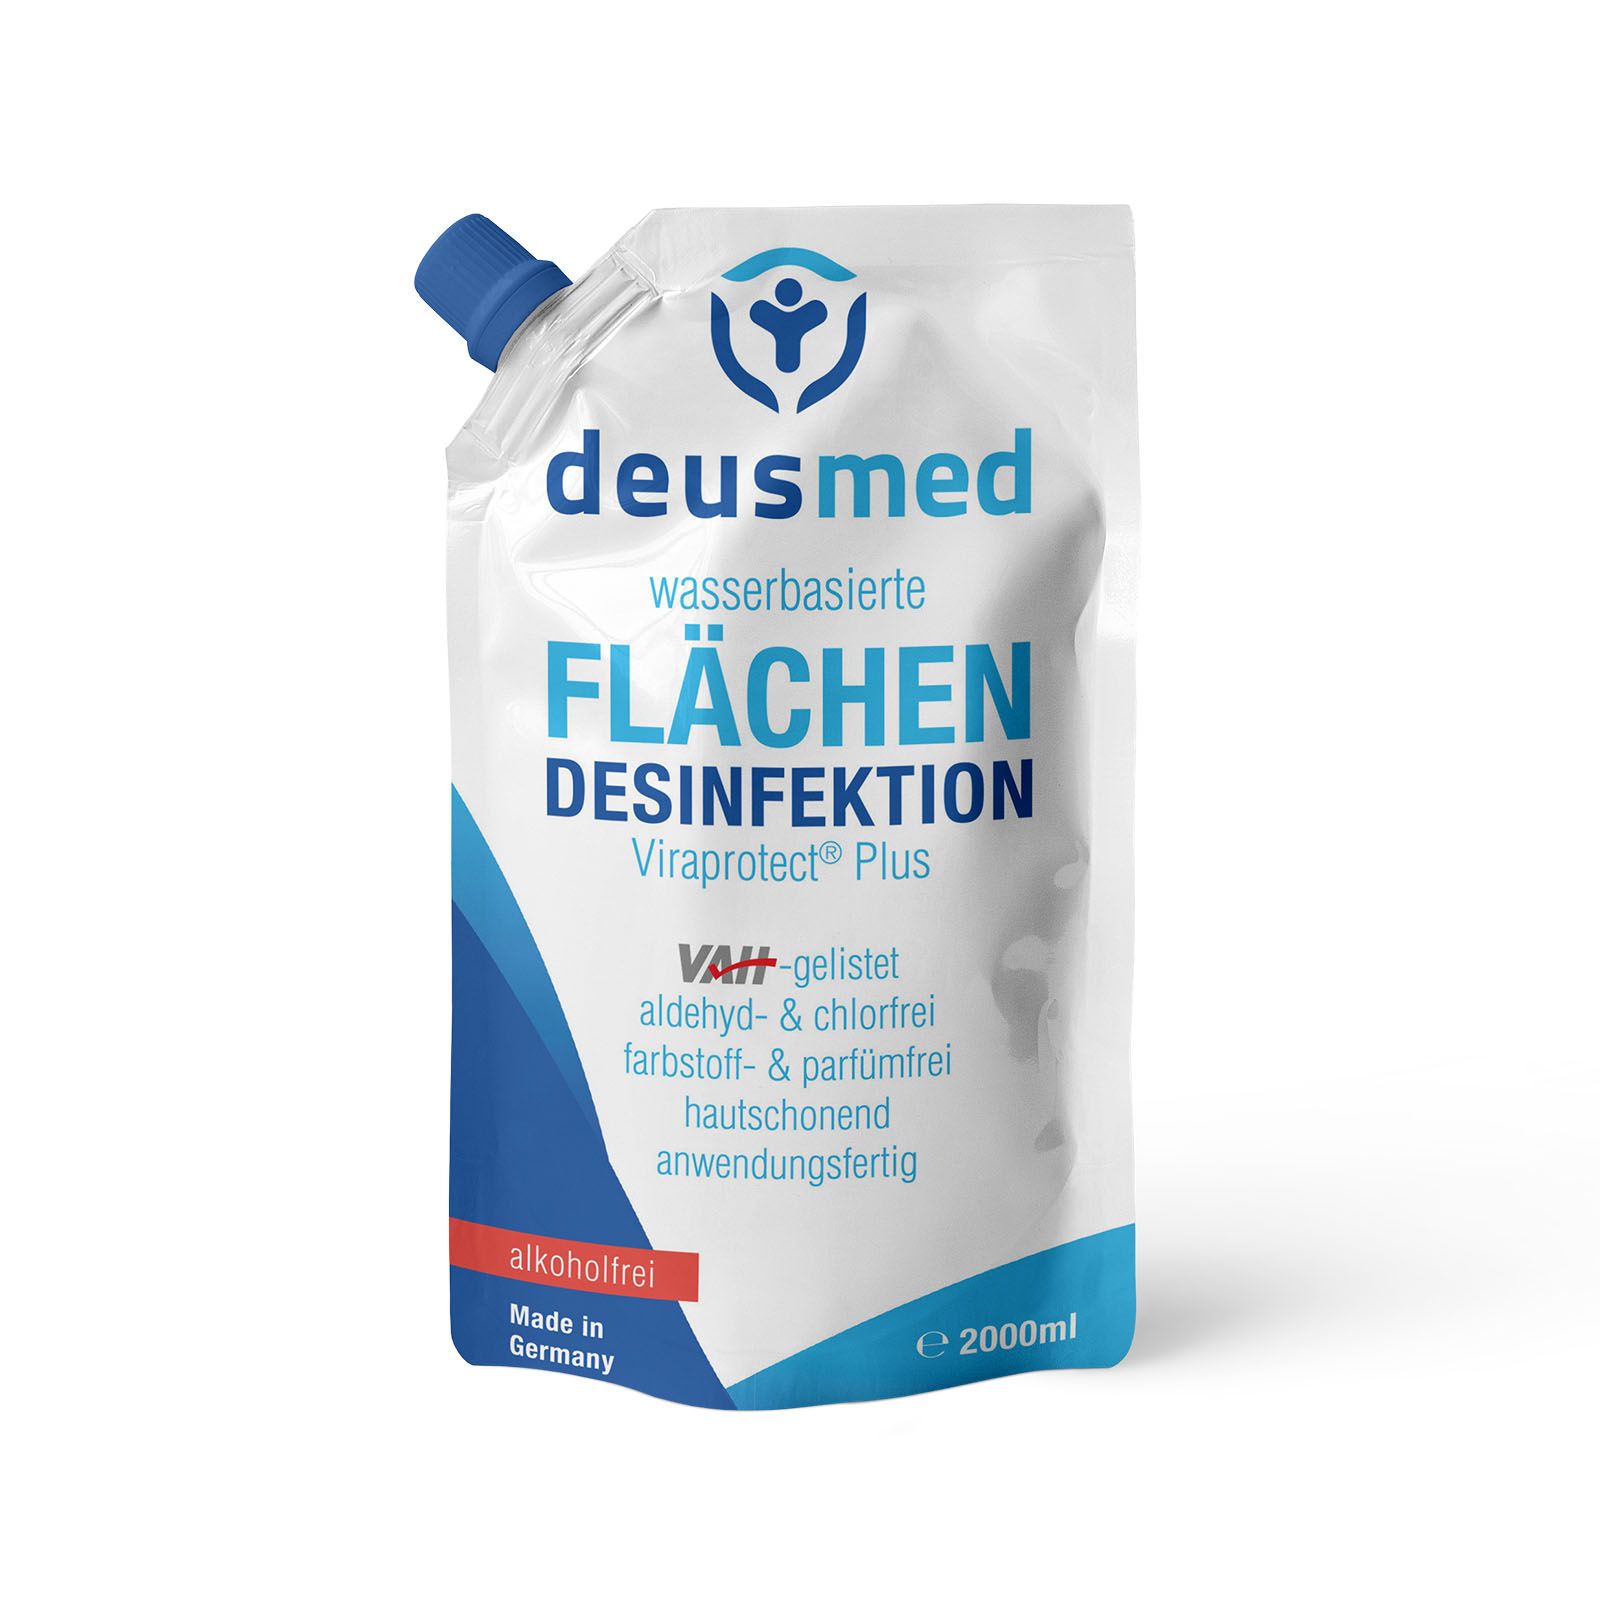 Deusmed area disinfection refill bag